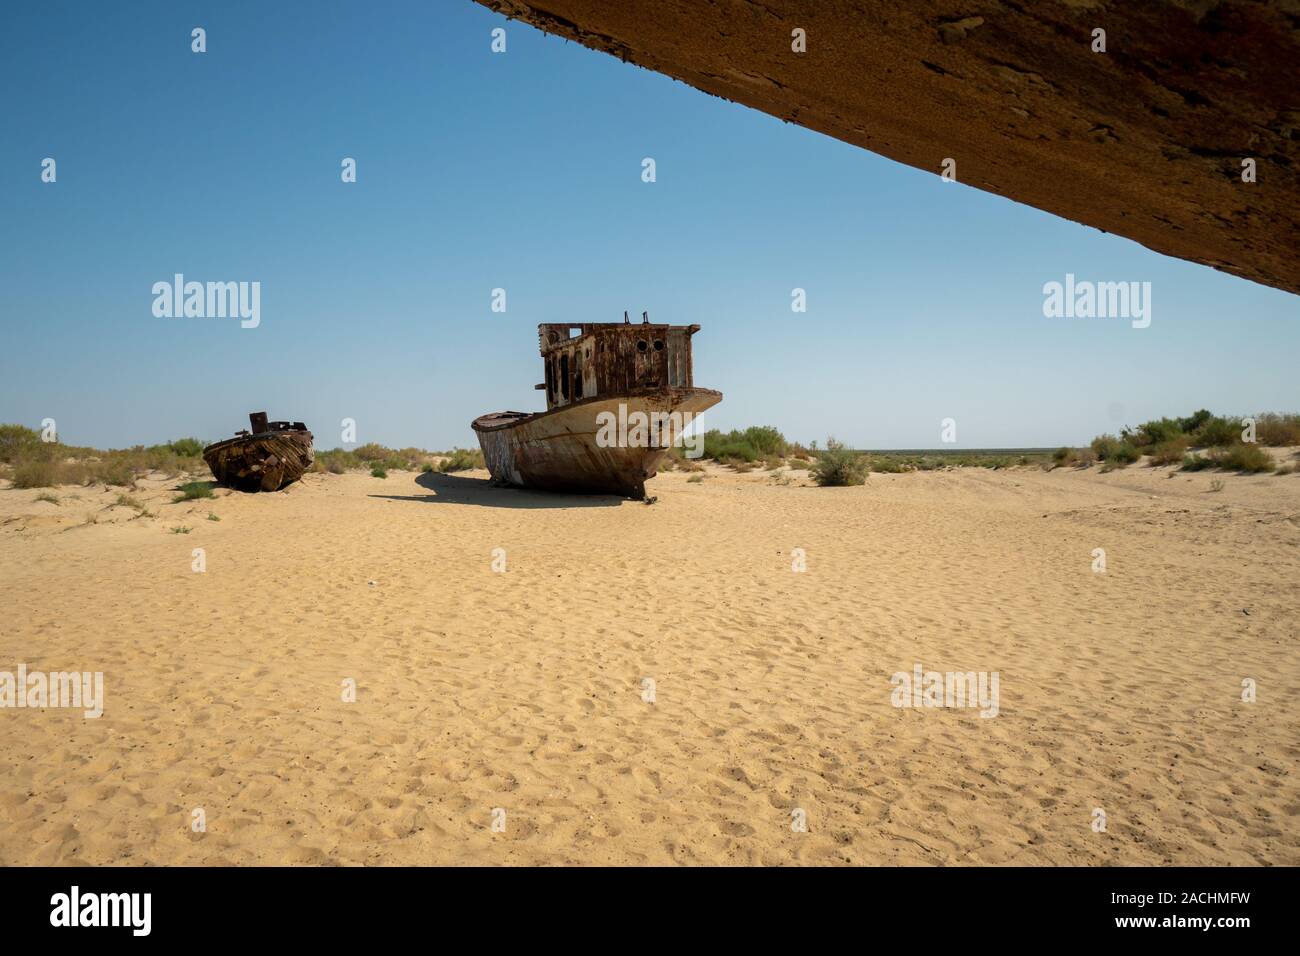 Rusty ship wreck in the deserted Aral Sea near Muynak in Uzbekistan Stock Photo